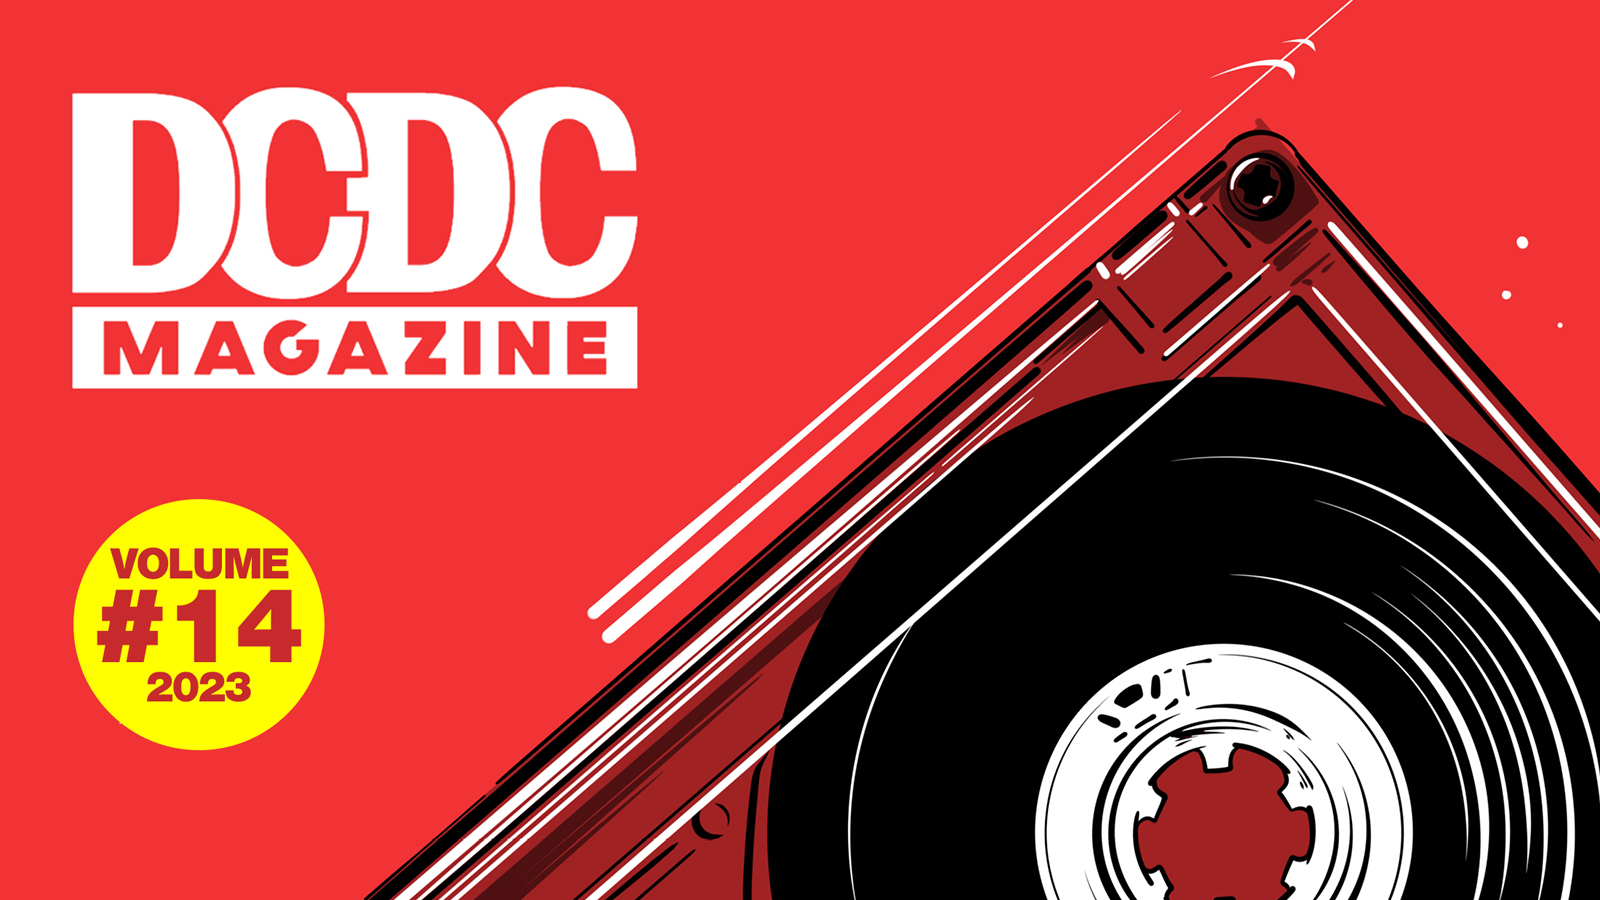 DCDC MAGAZINE - Volume #14 - 2023